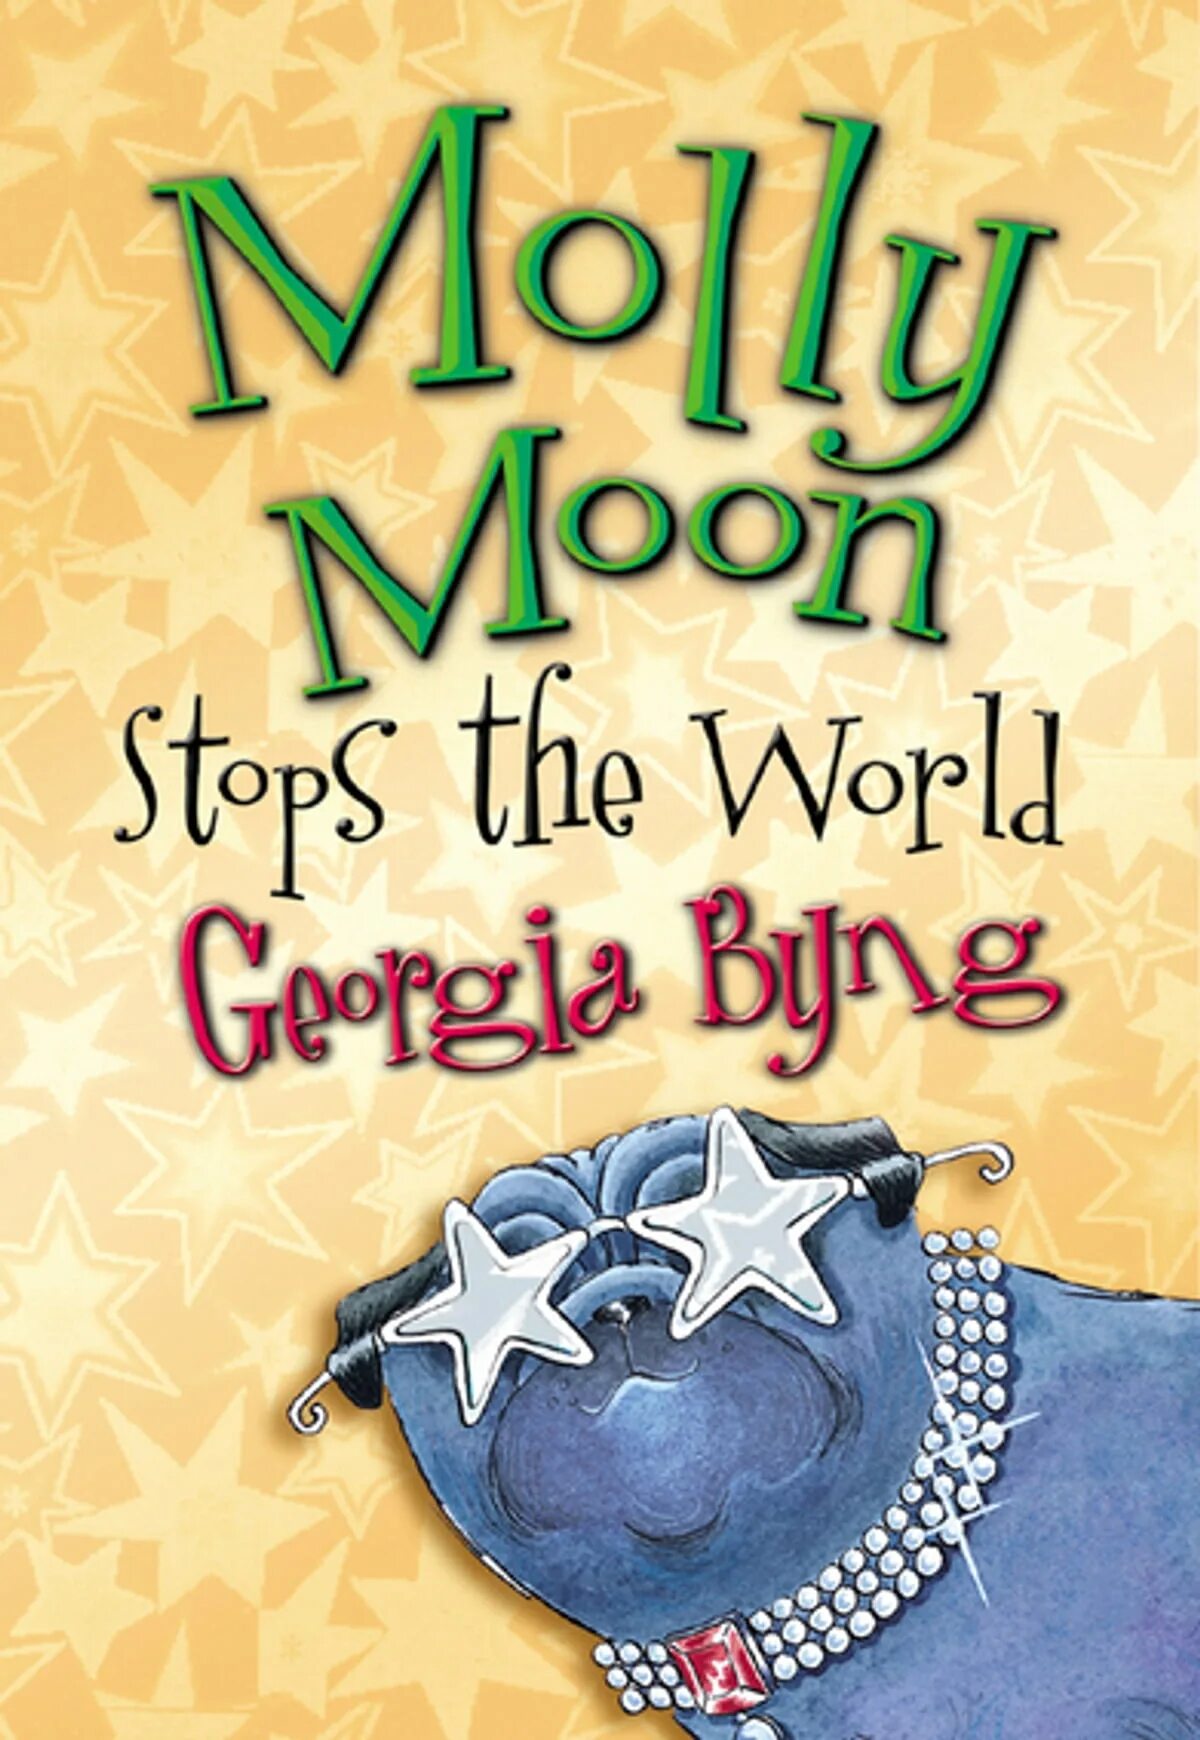 Moon stop. Молли Мун. Molly Moon stops the World Джорджия бинг книга. Джорджия бинг Молли. Молли Мун все книги.